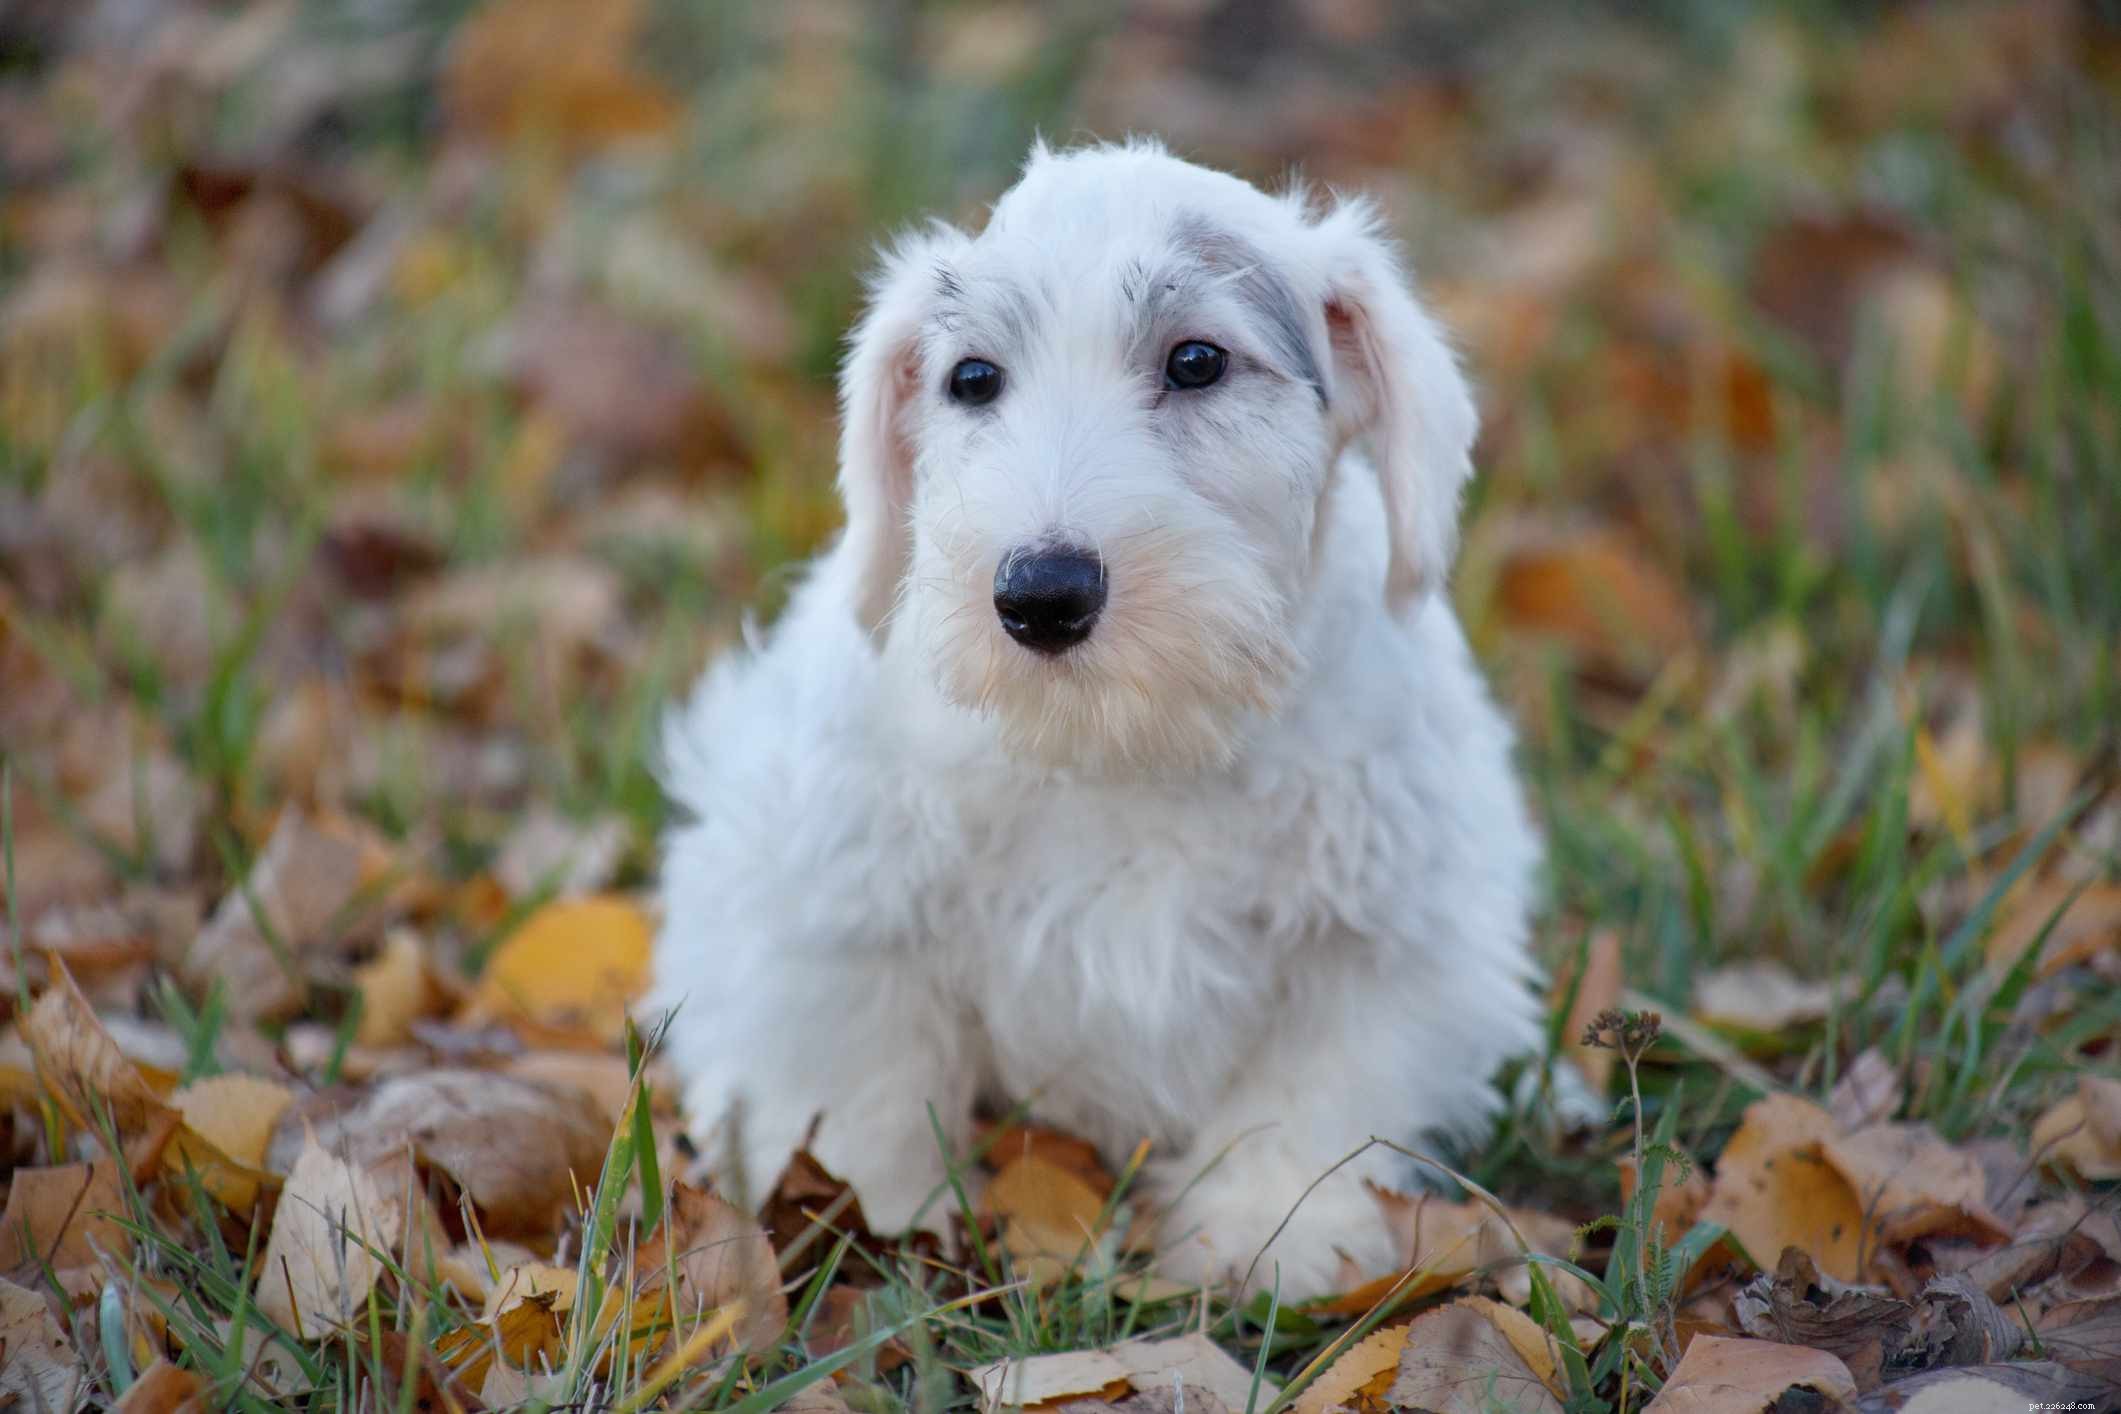 Sealyham Terrier :profil de race de chien